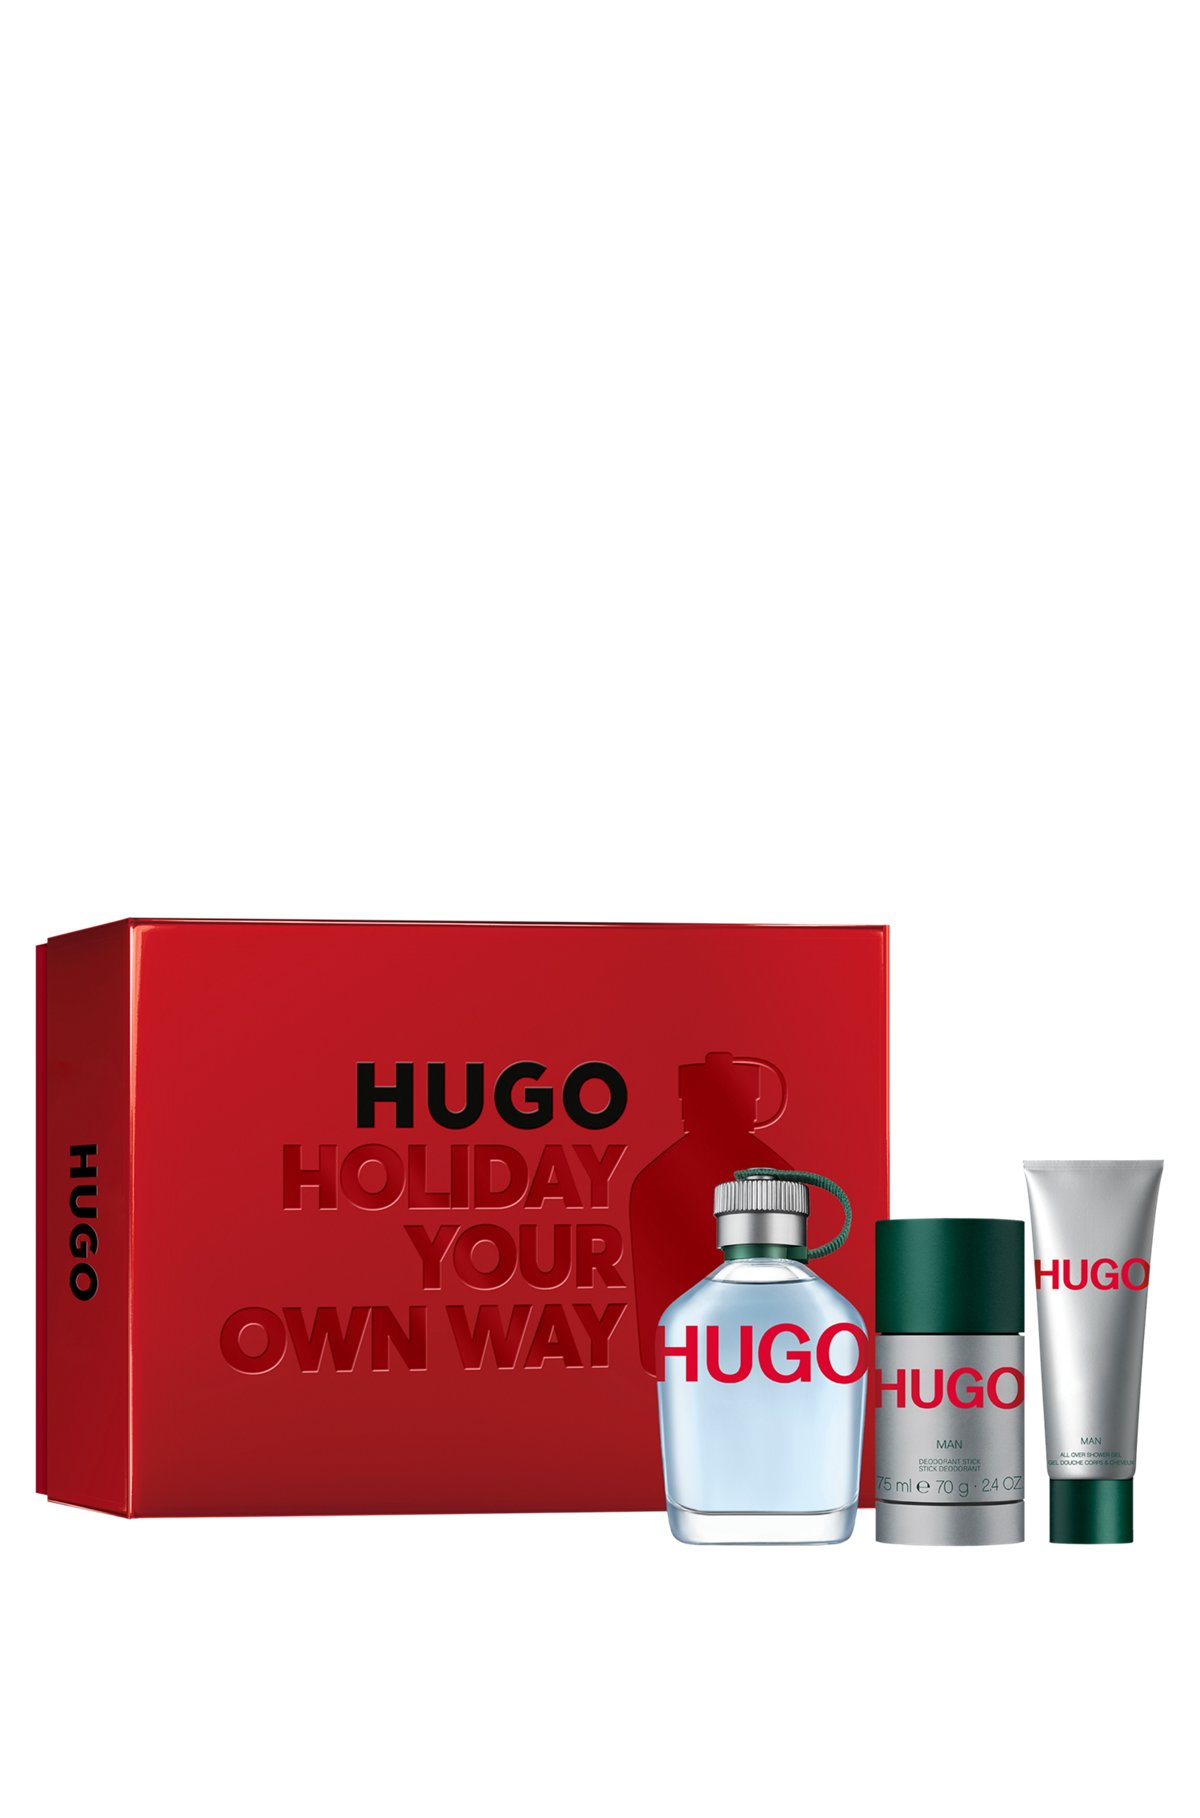 HUGO Man eau de toilette, deodorant and shower gel set, Assorted-Pre-Pack